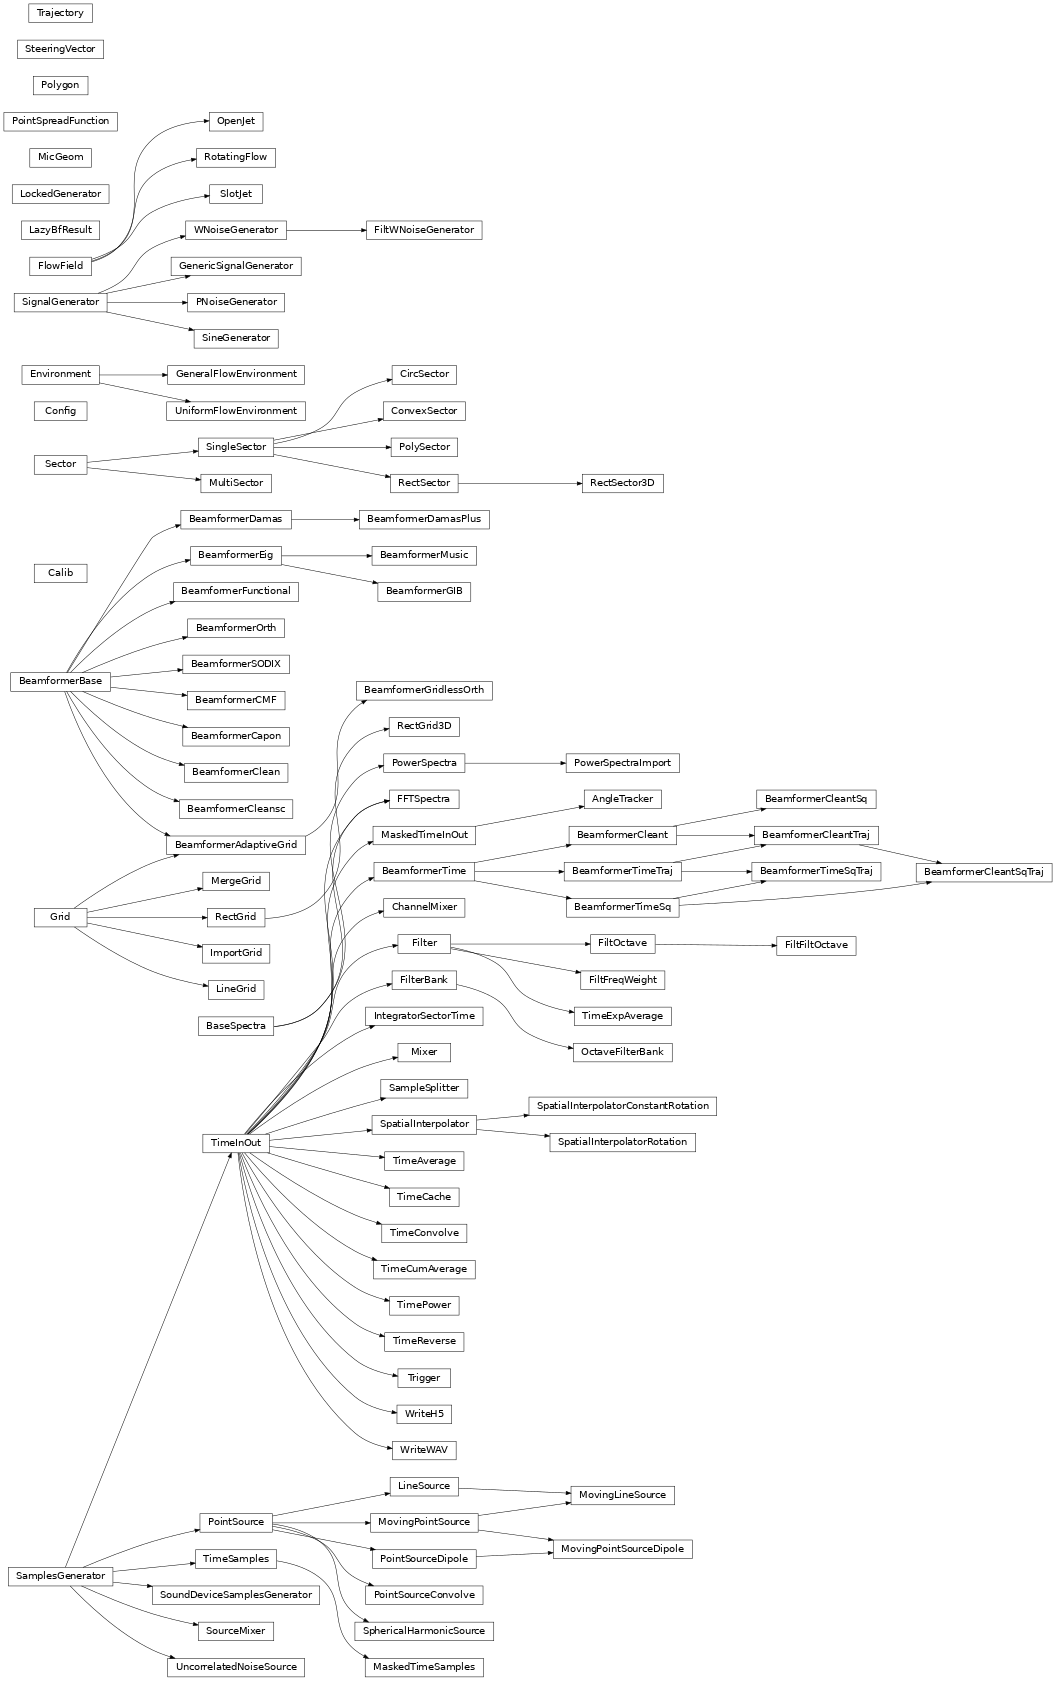 Inheritance diagram of acoular.environments, acoular.calib, acoular.configuration, acoular.fbeamform, acoular.grids, acoular.microphones, acoular.sdinput, acoular.signals, acoular.sources, acoular.spectra, acoular.tbeamform, acoular.tools, acoular.tprocess, acoular.trajectory